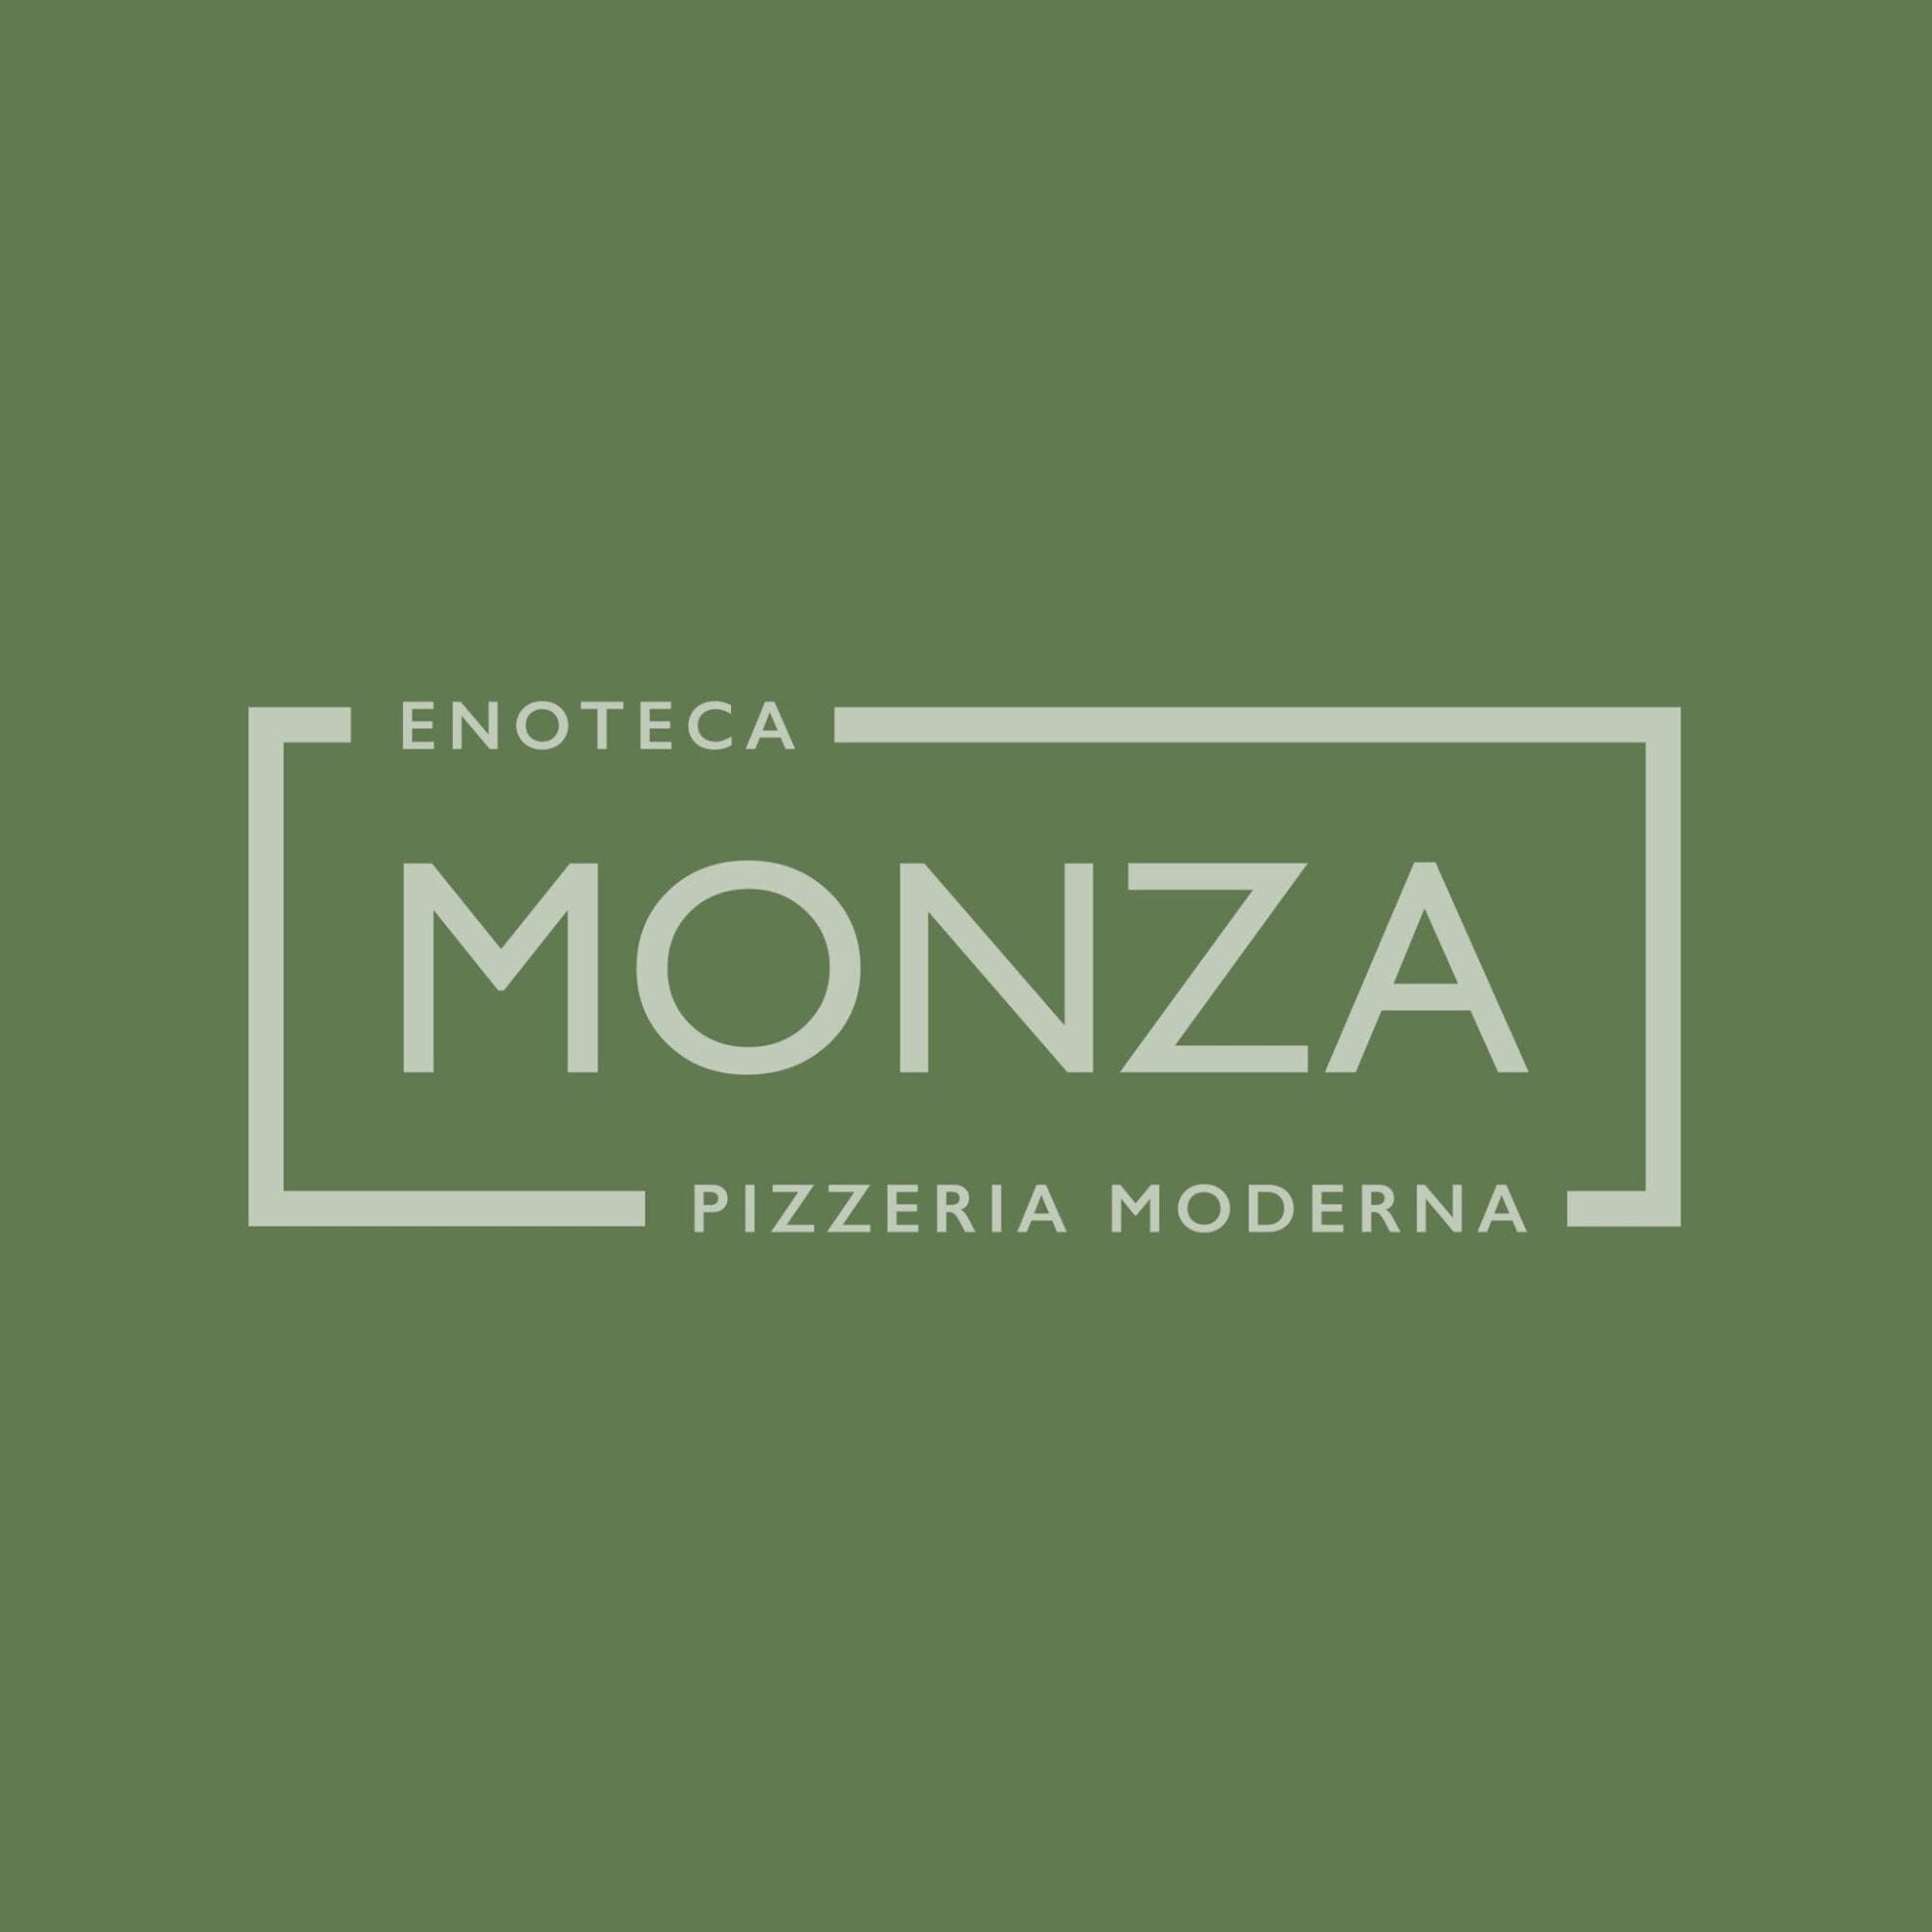 Enoteca Monza Pizzeria Moderna